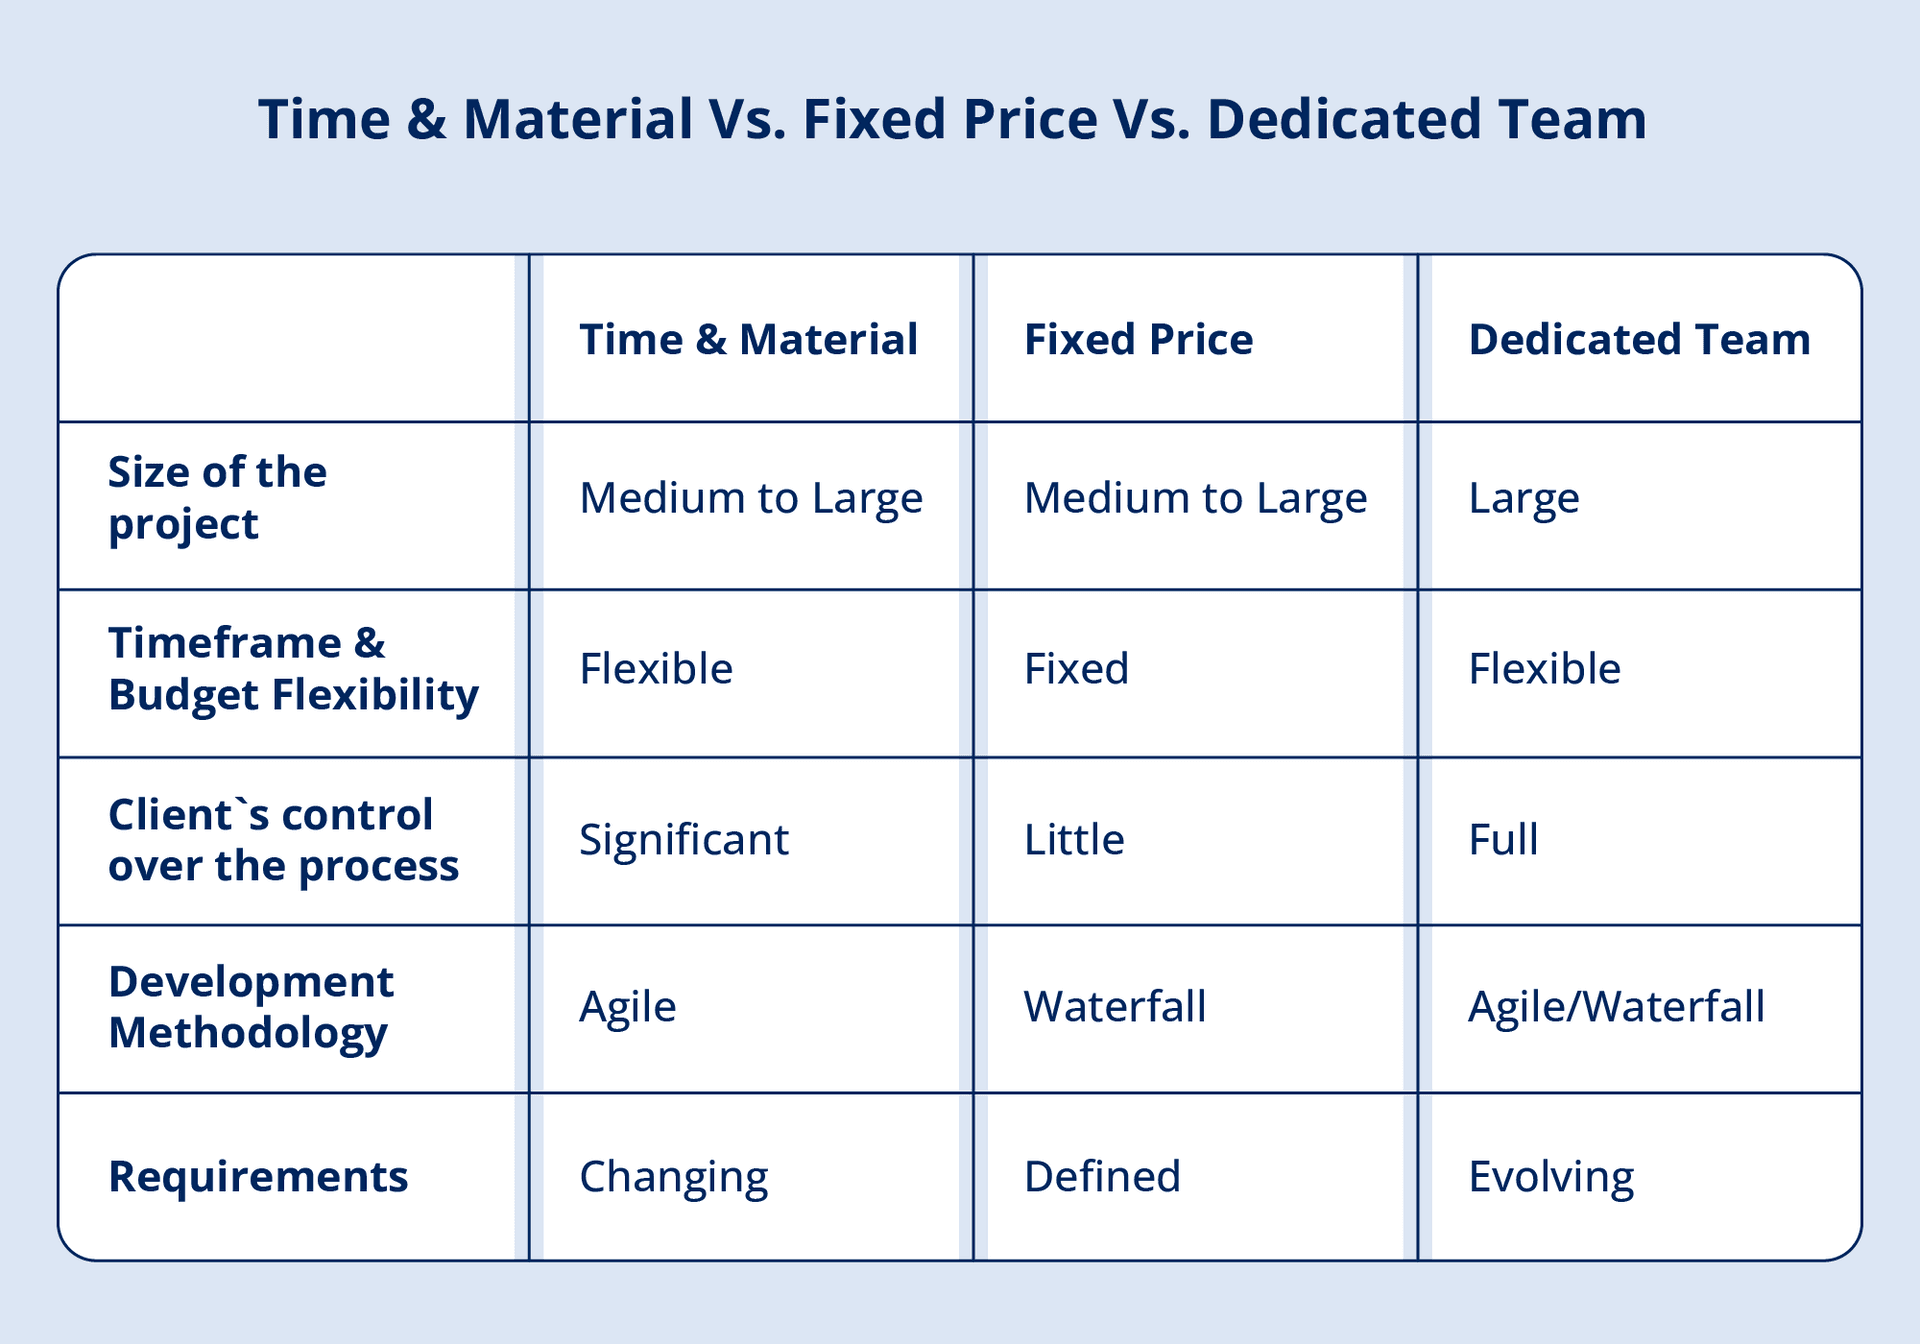 dedicated team vs tm vs fixed price